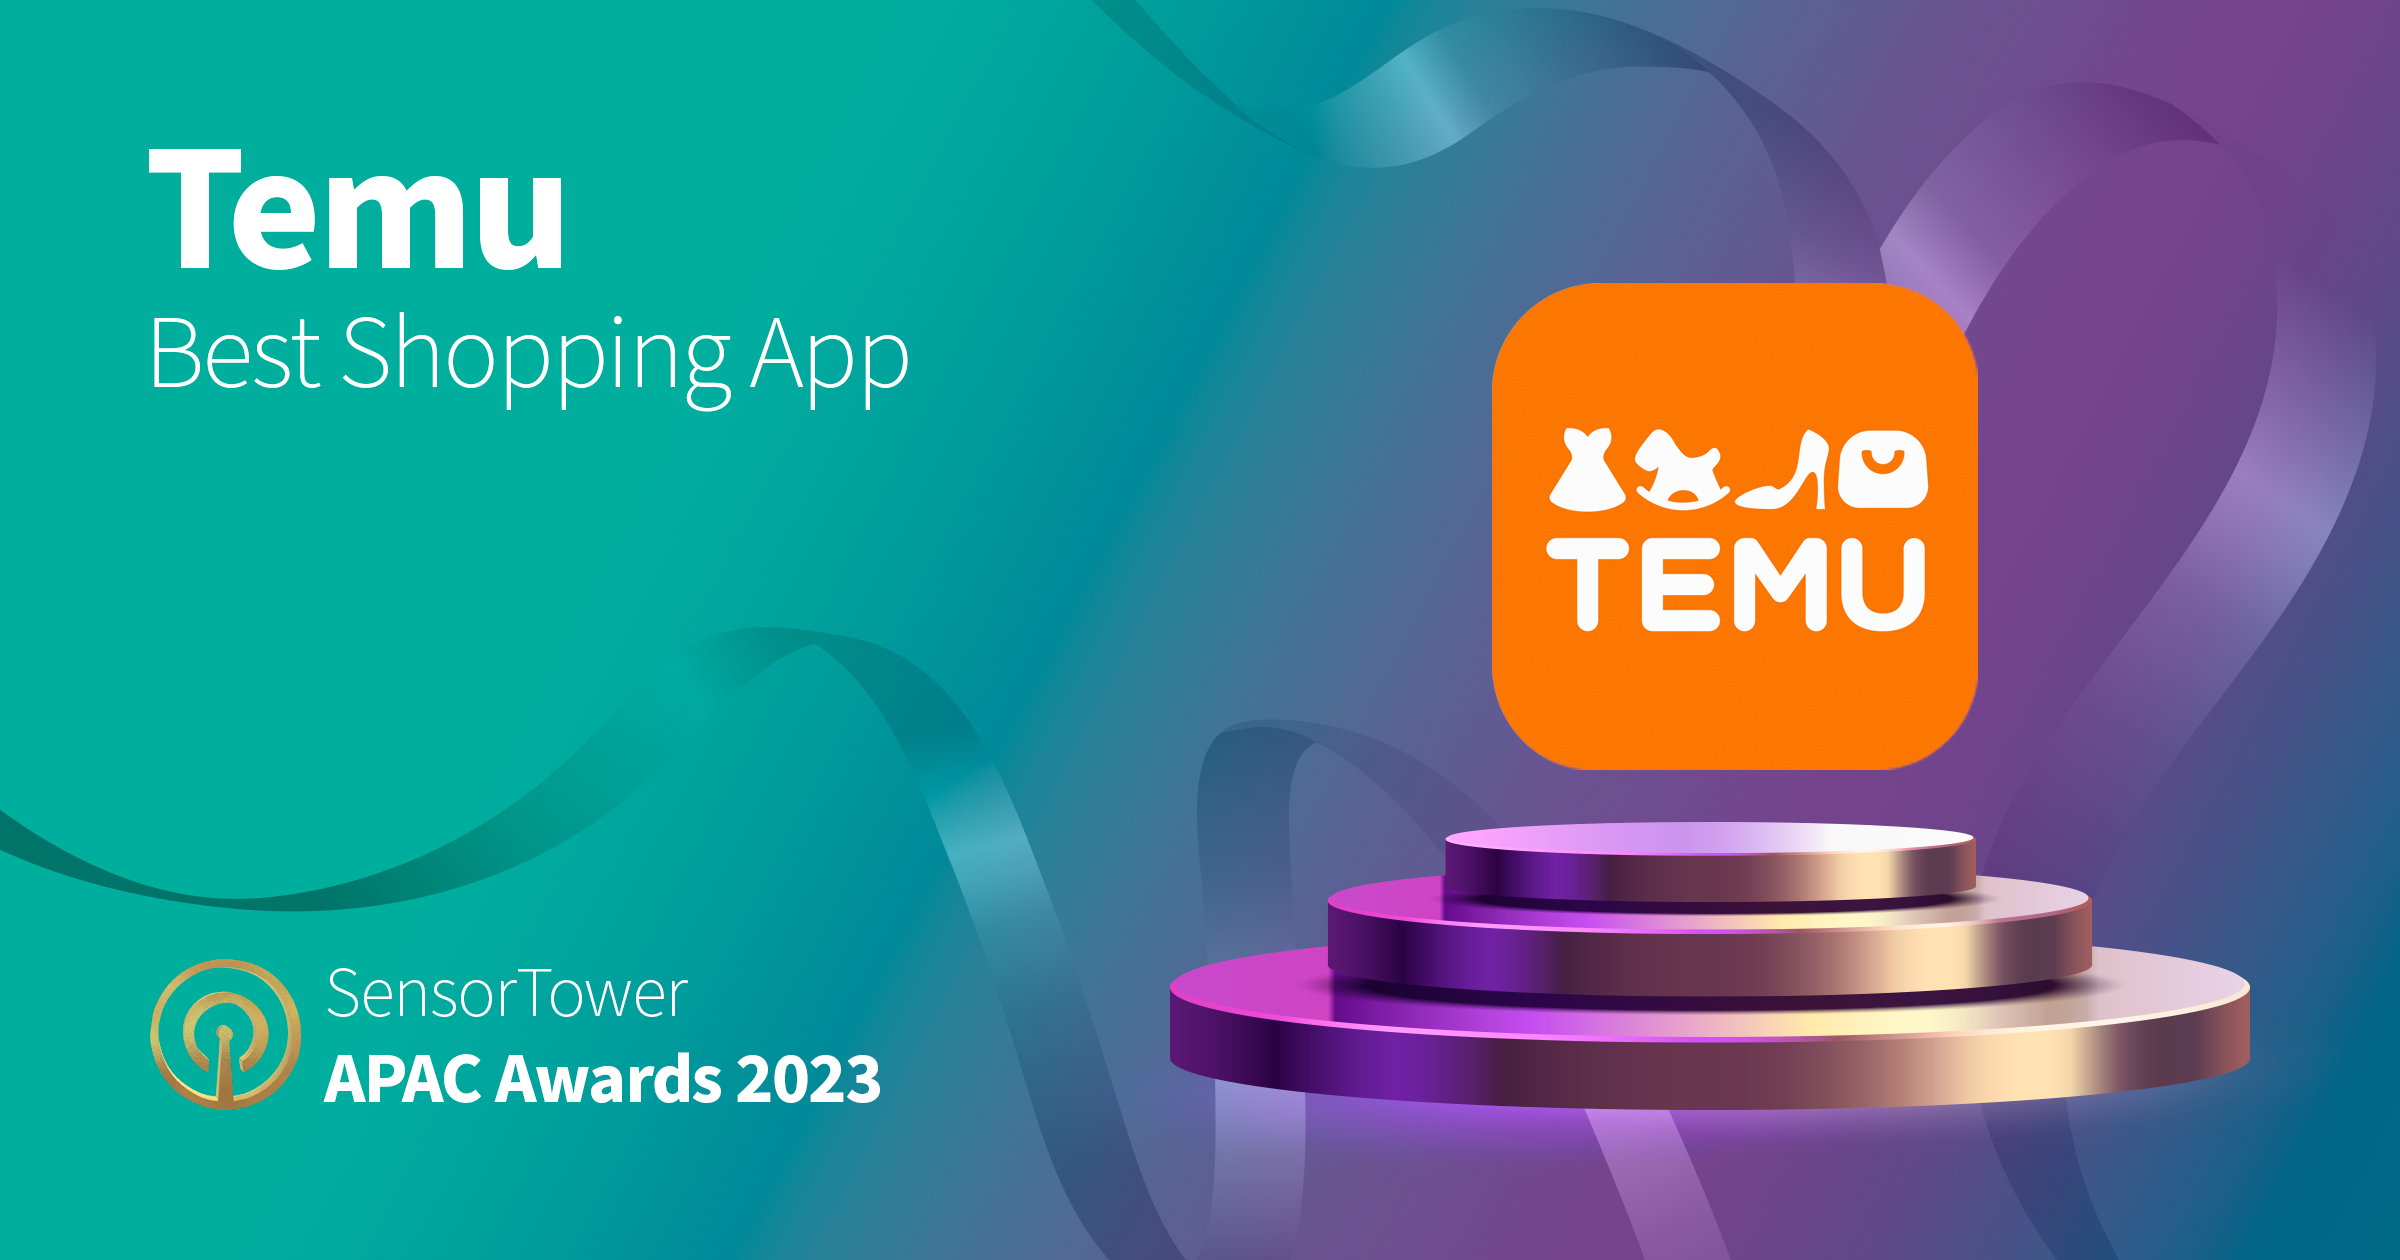 Temu (Best Shopping App)